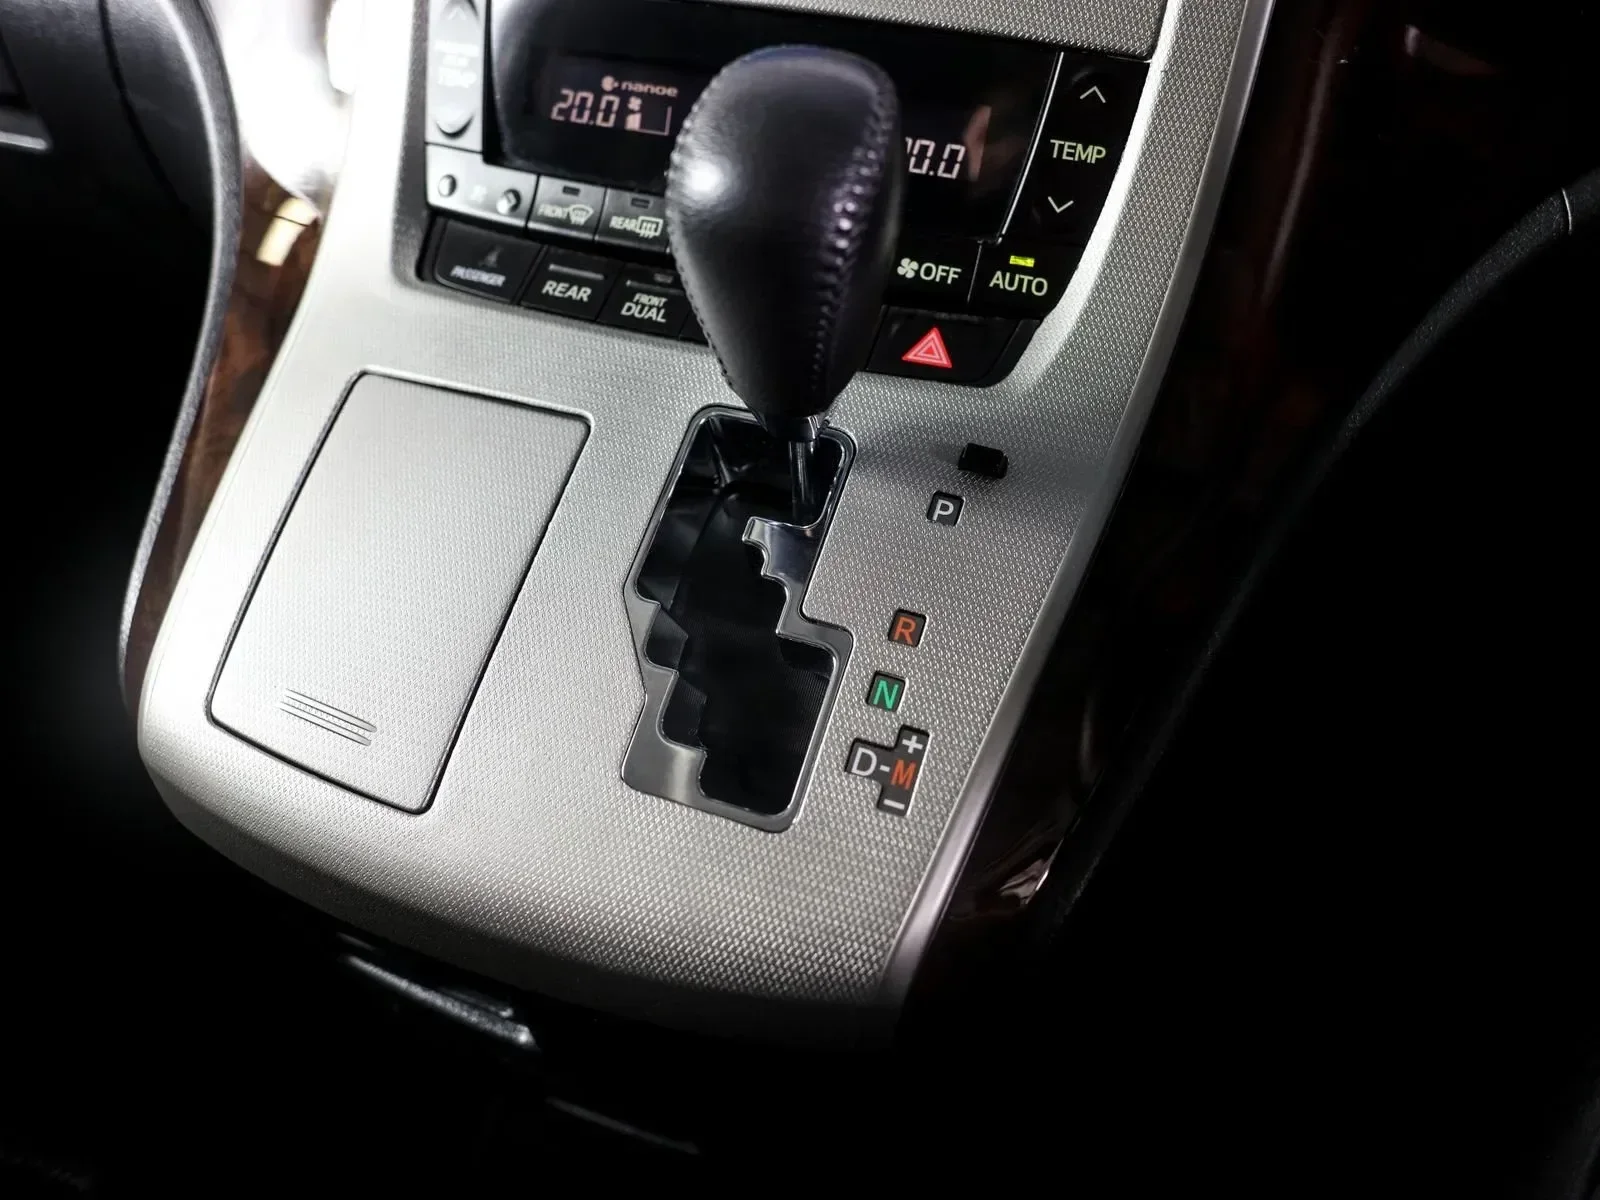 Toyota Vellfire 2.4 Auto AWD 5dr Automatic 2012